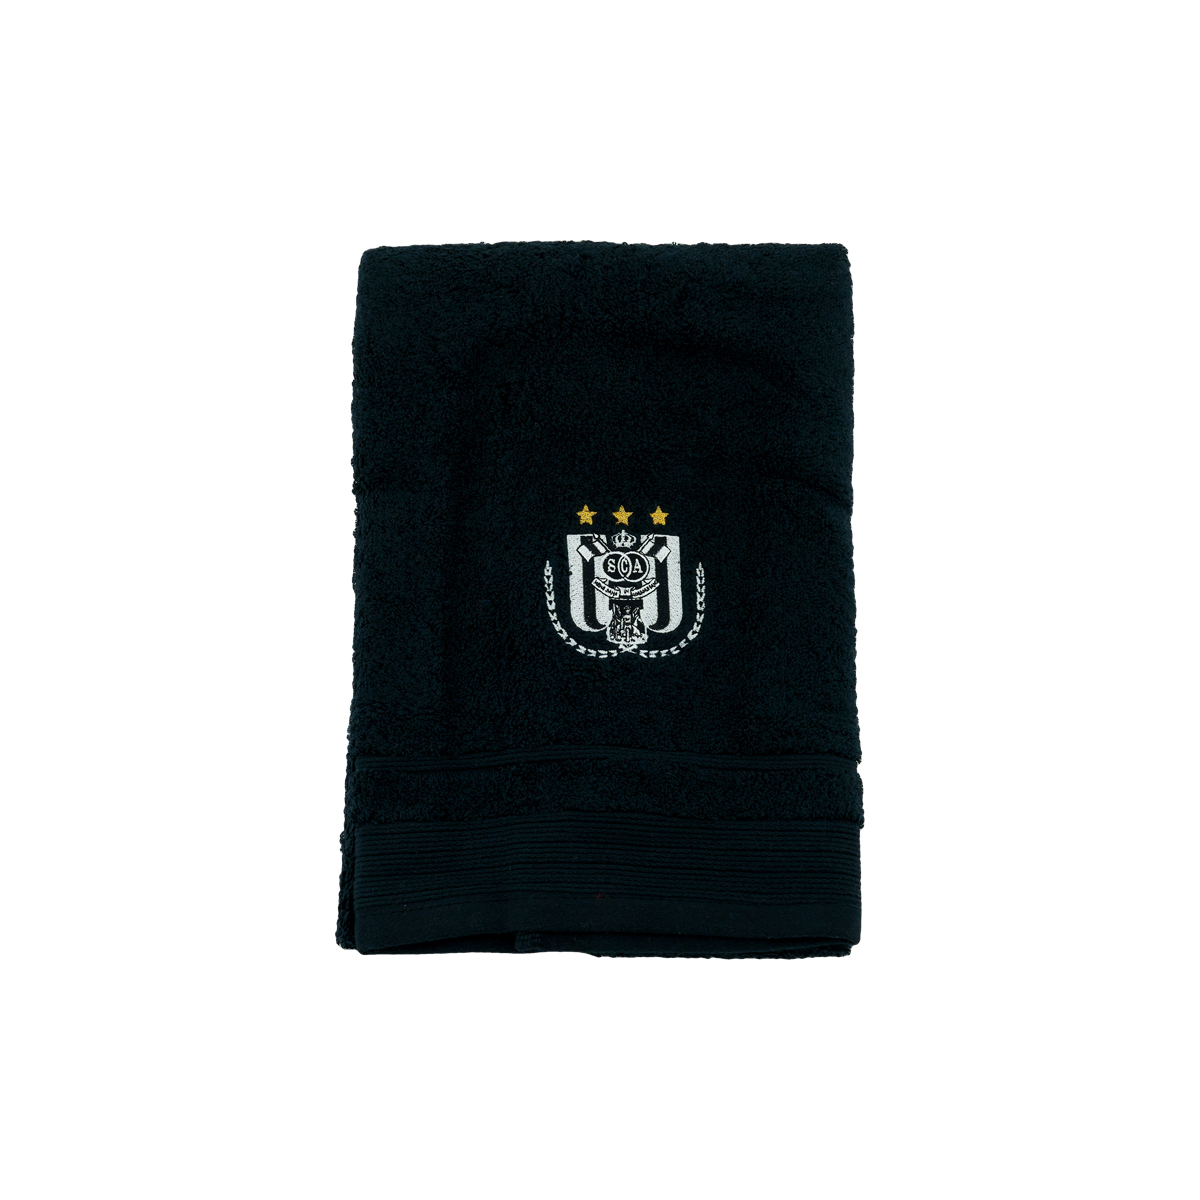 Towel Set - Black